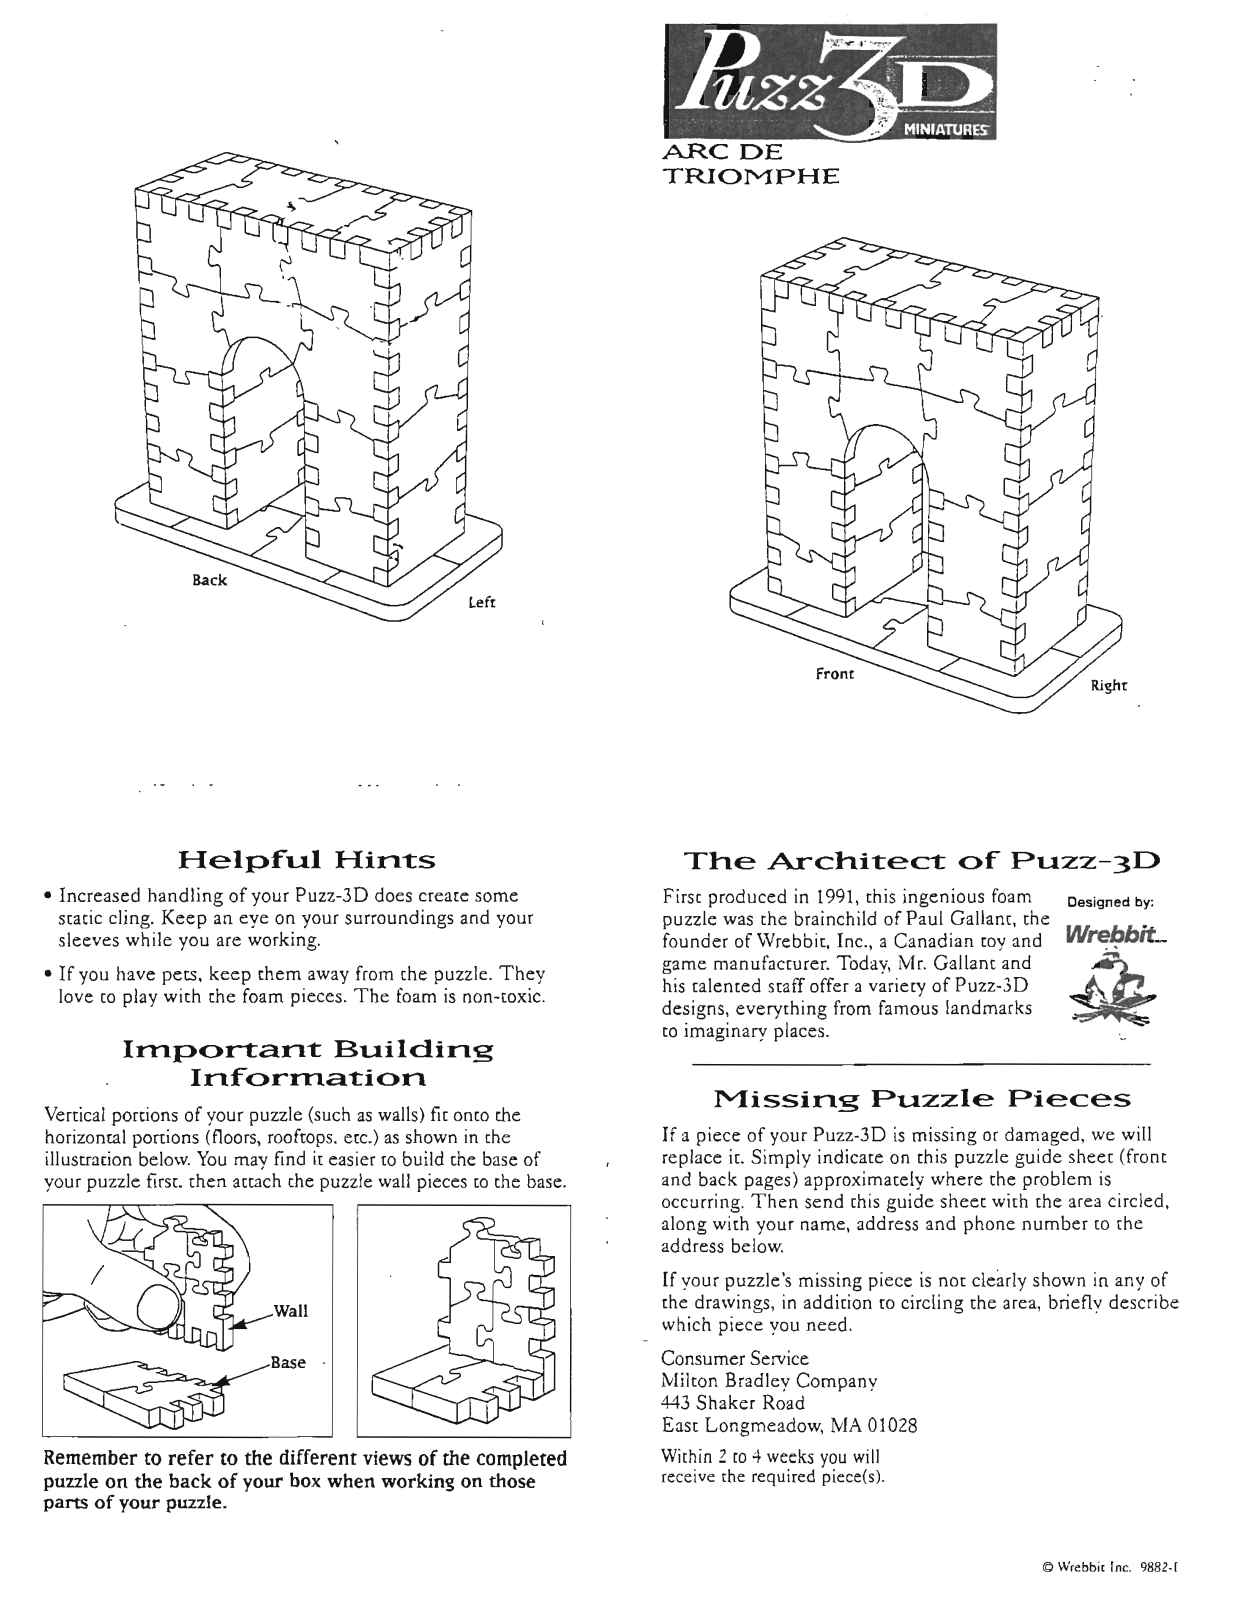 Hasbro PUZZ 3D MINIATURES ARC DE TRIOMPHE Manual